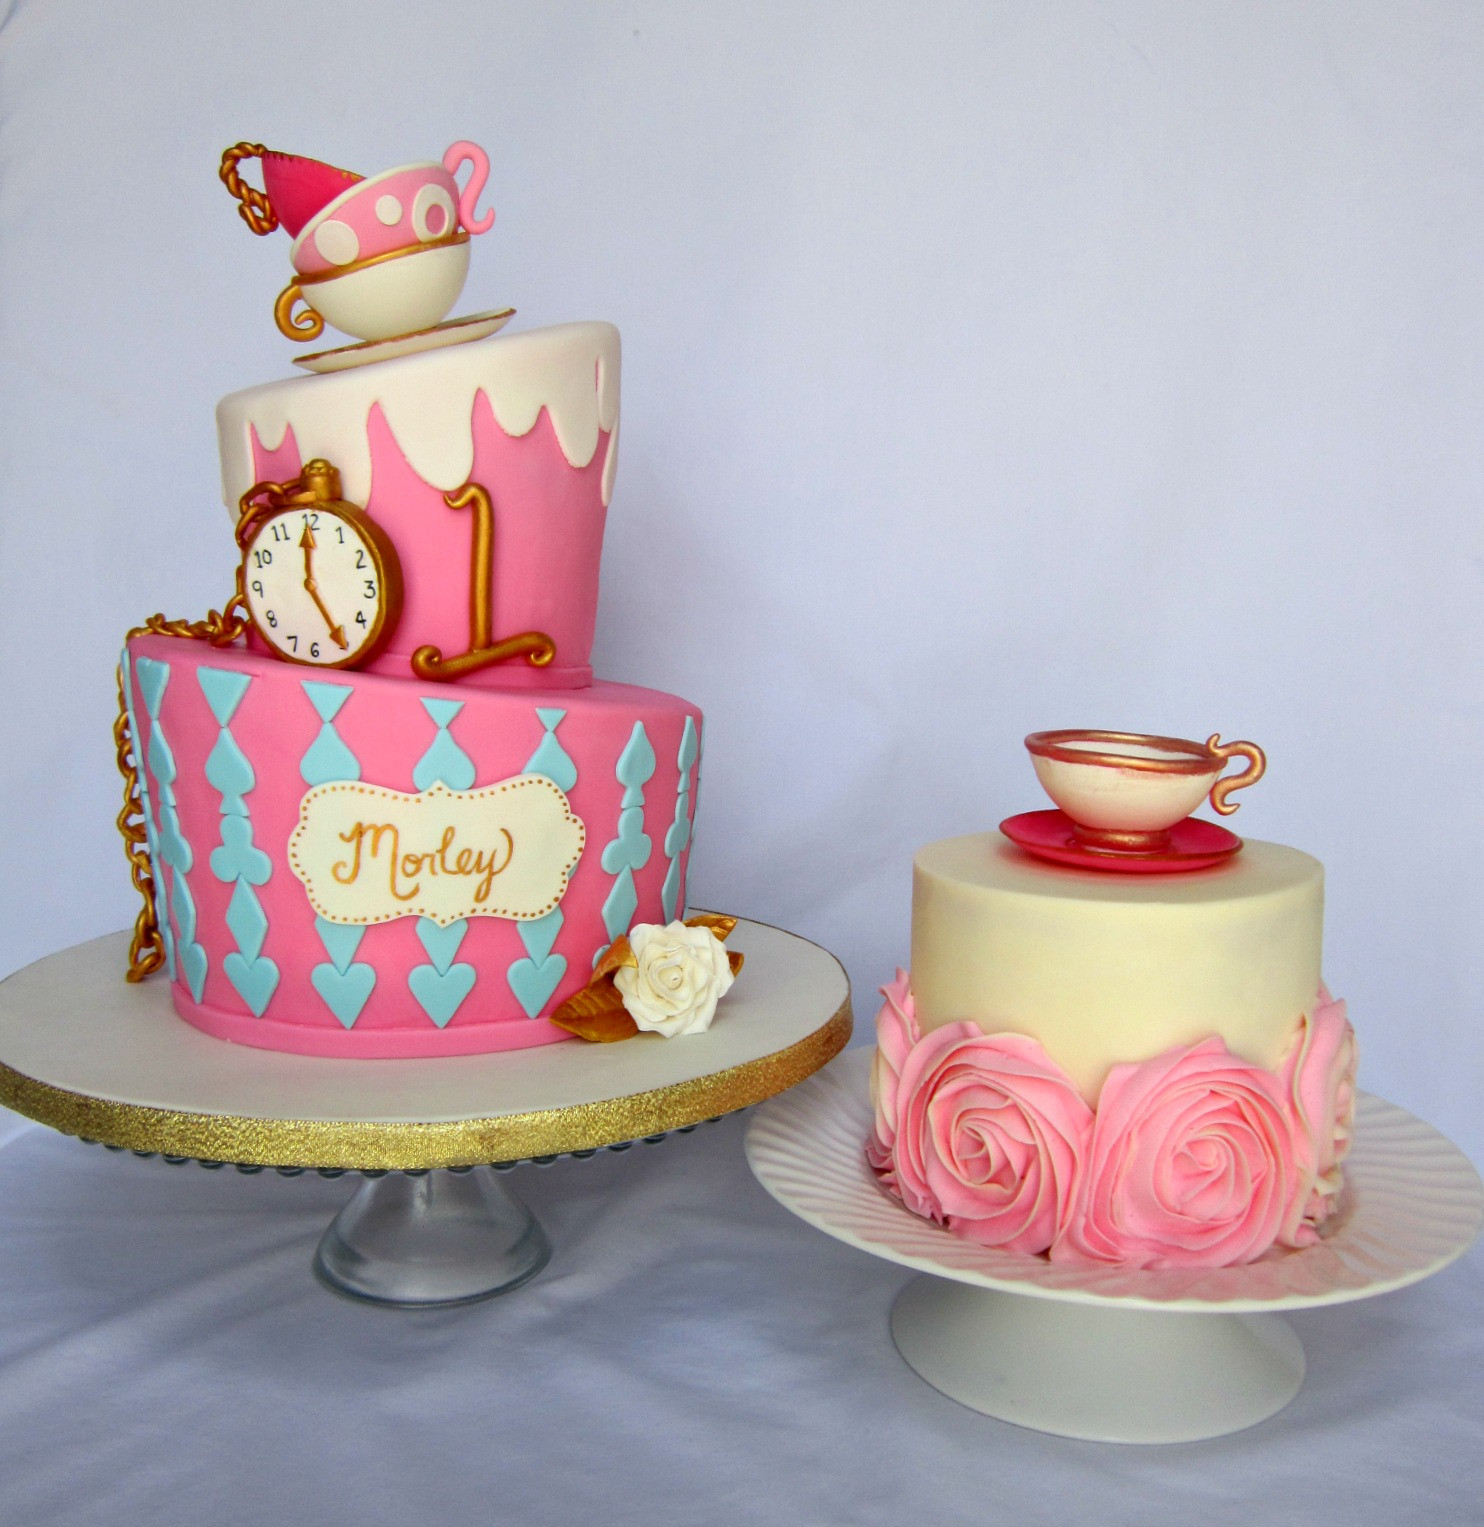 Alice In Wonderland Birthday Cake
 Delectable Cakes "Alice in Wonderland" Teacup Birthday Cake